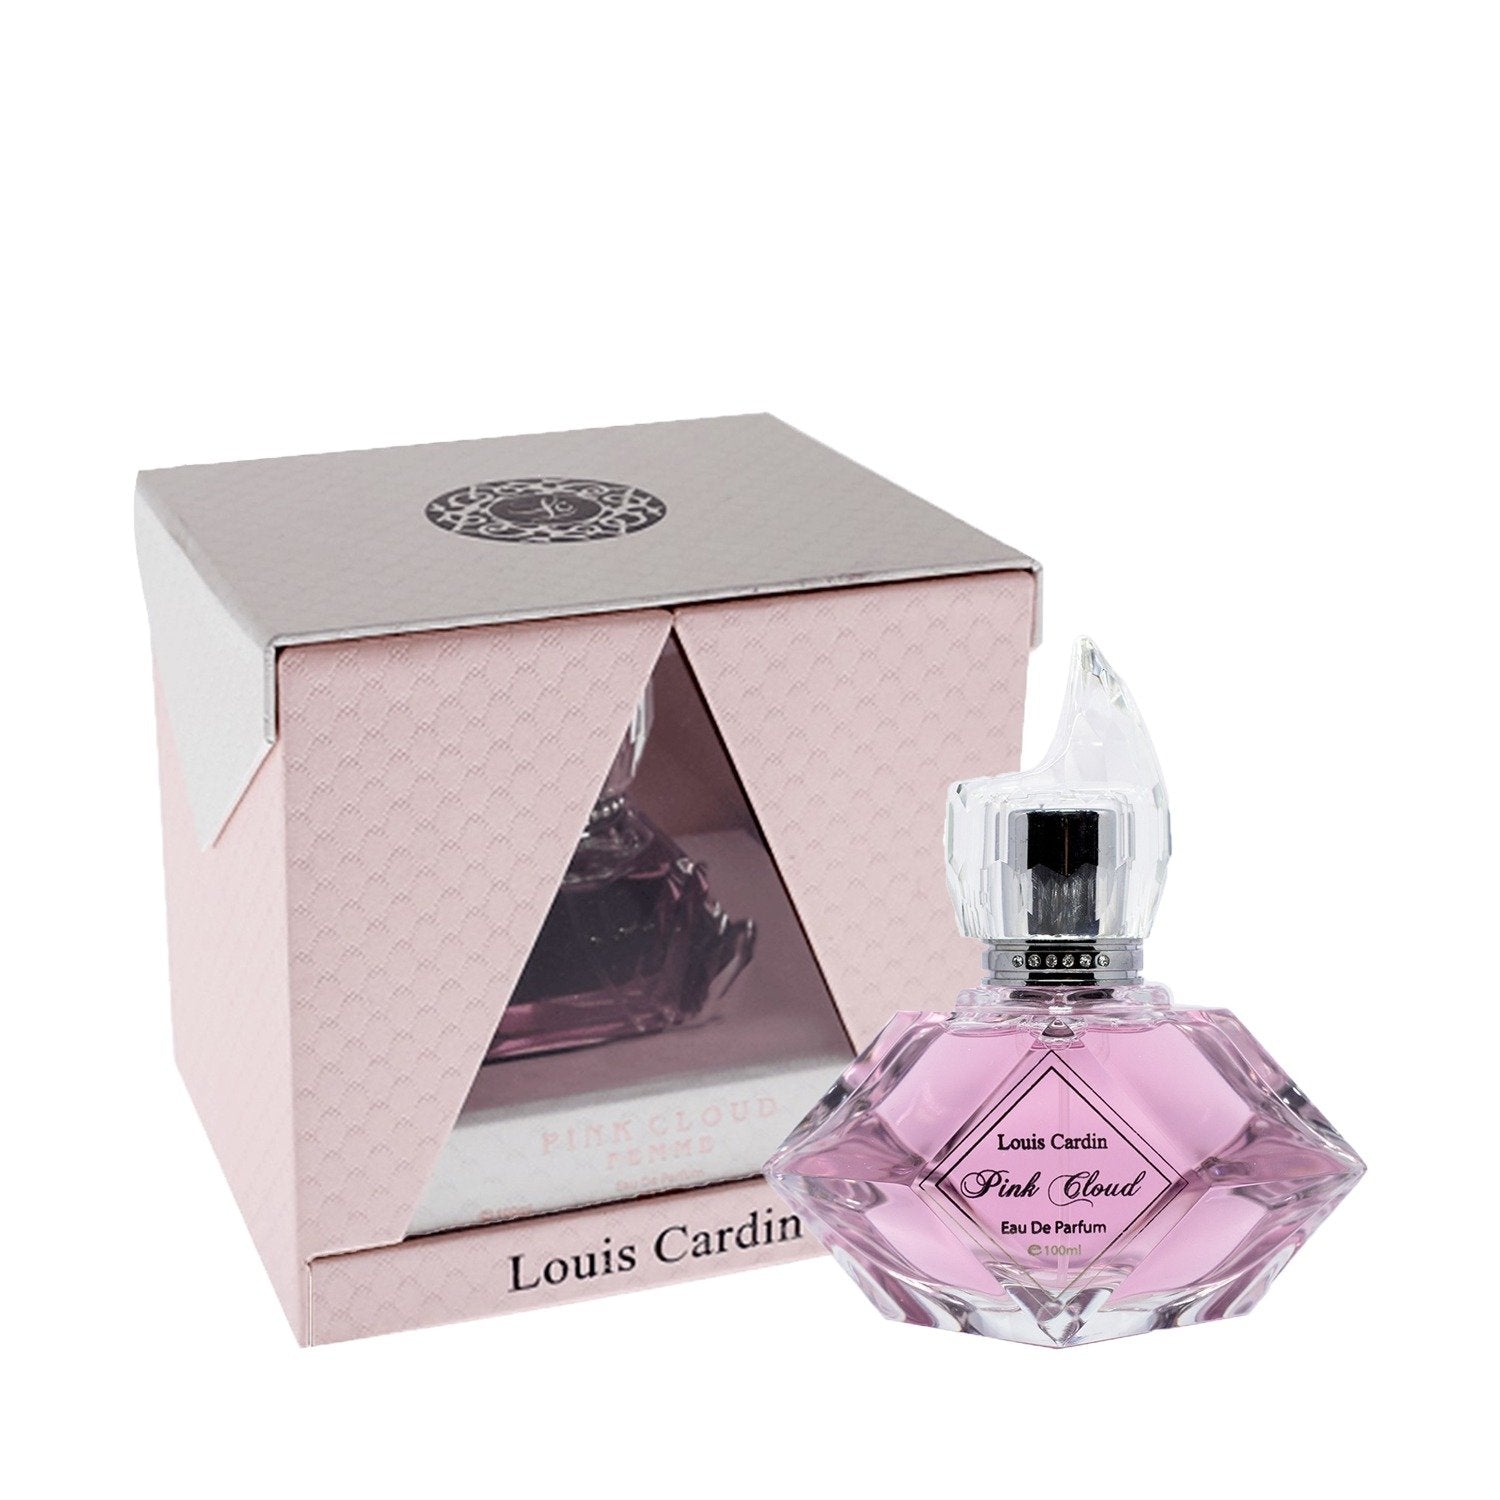 Louis Cardin Pink Cloud - Best men and women pefume cologne scent oud collection